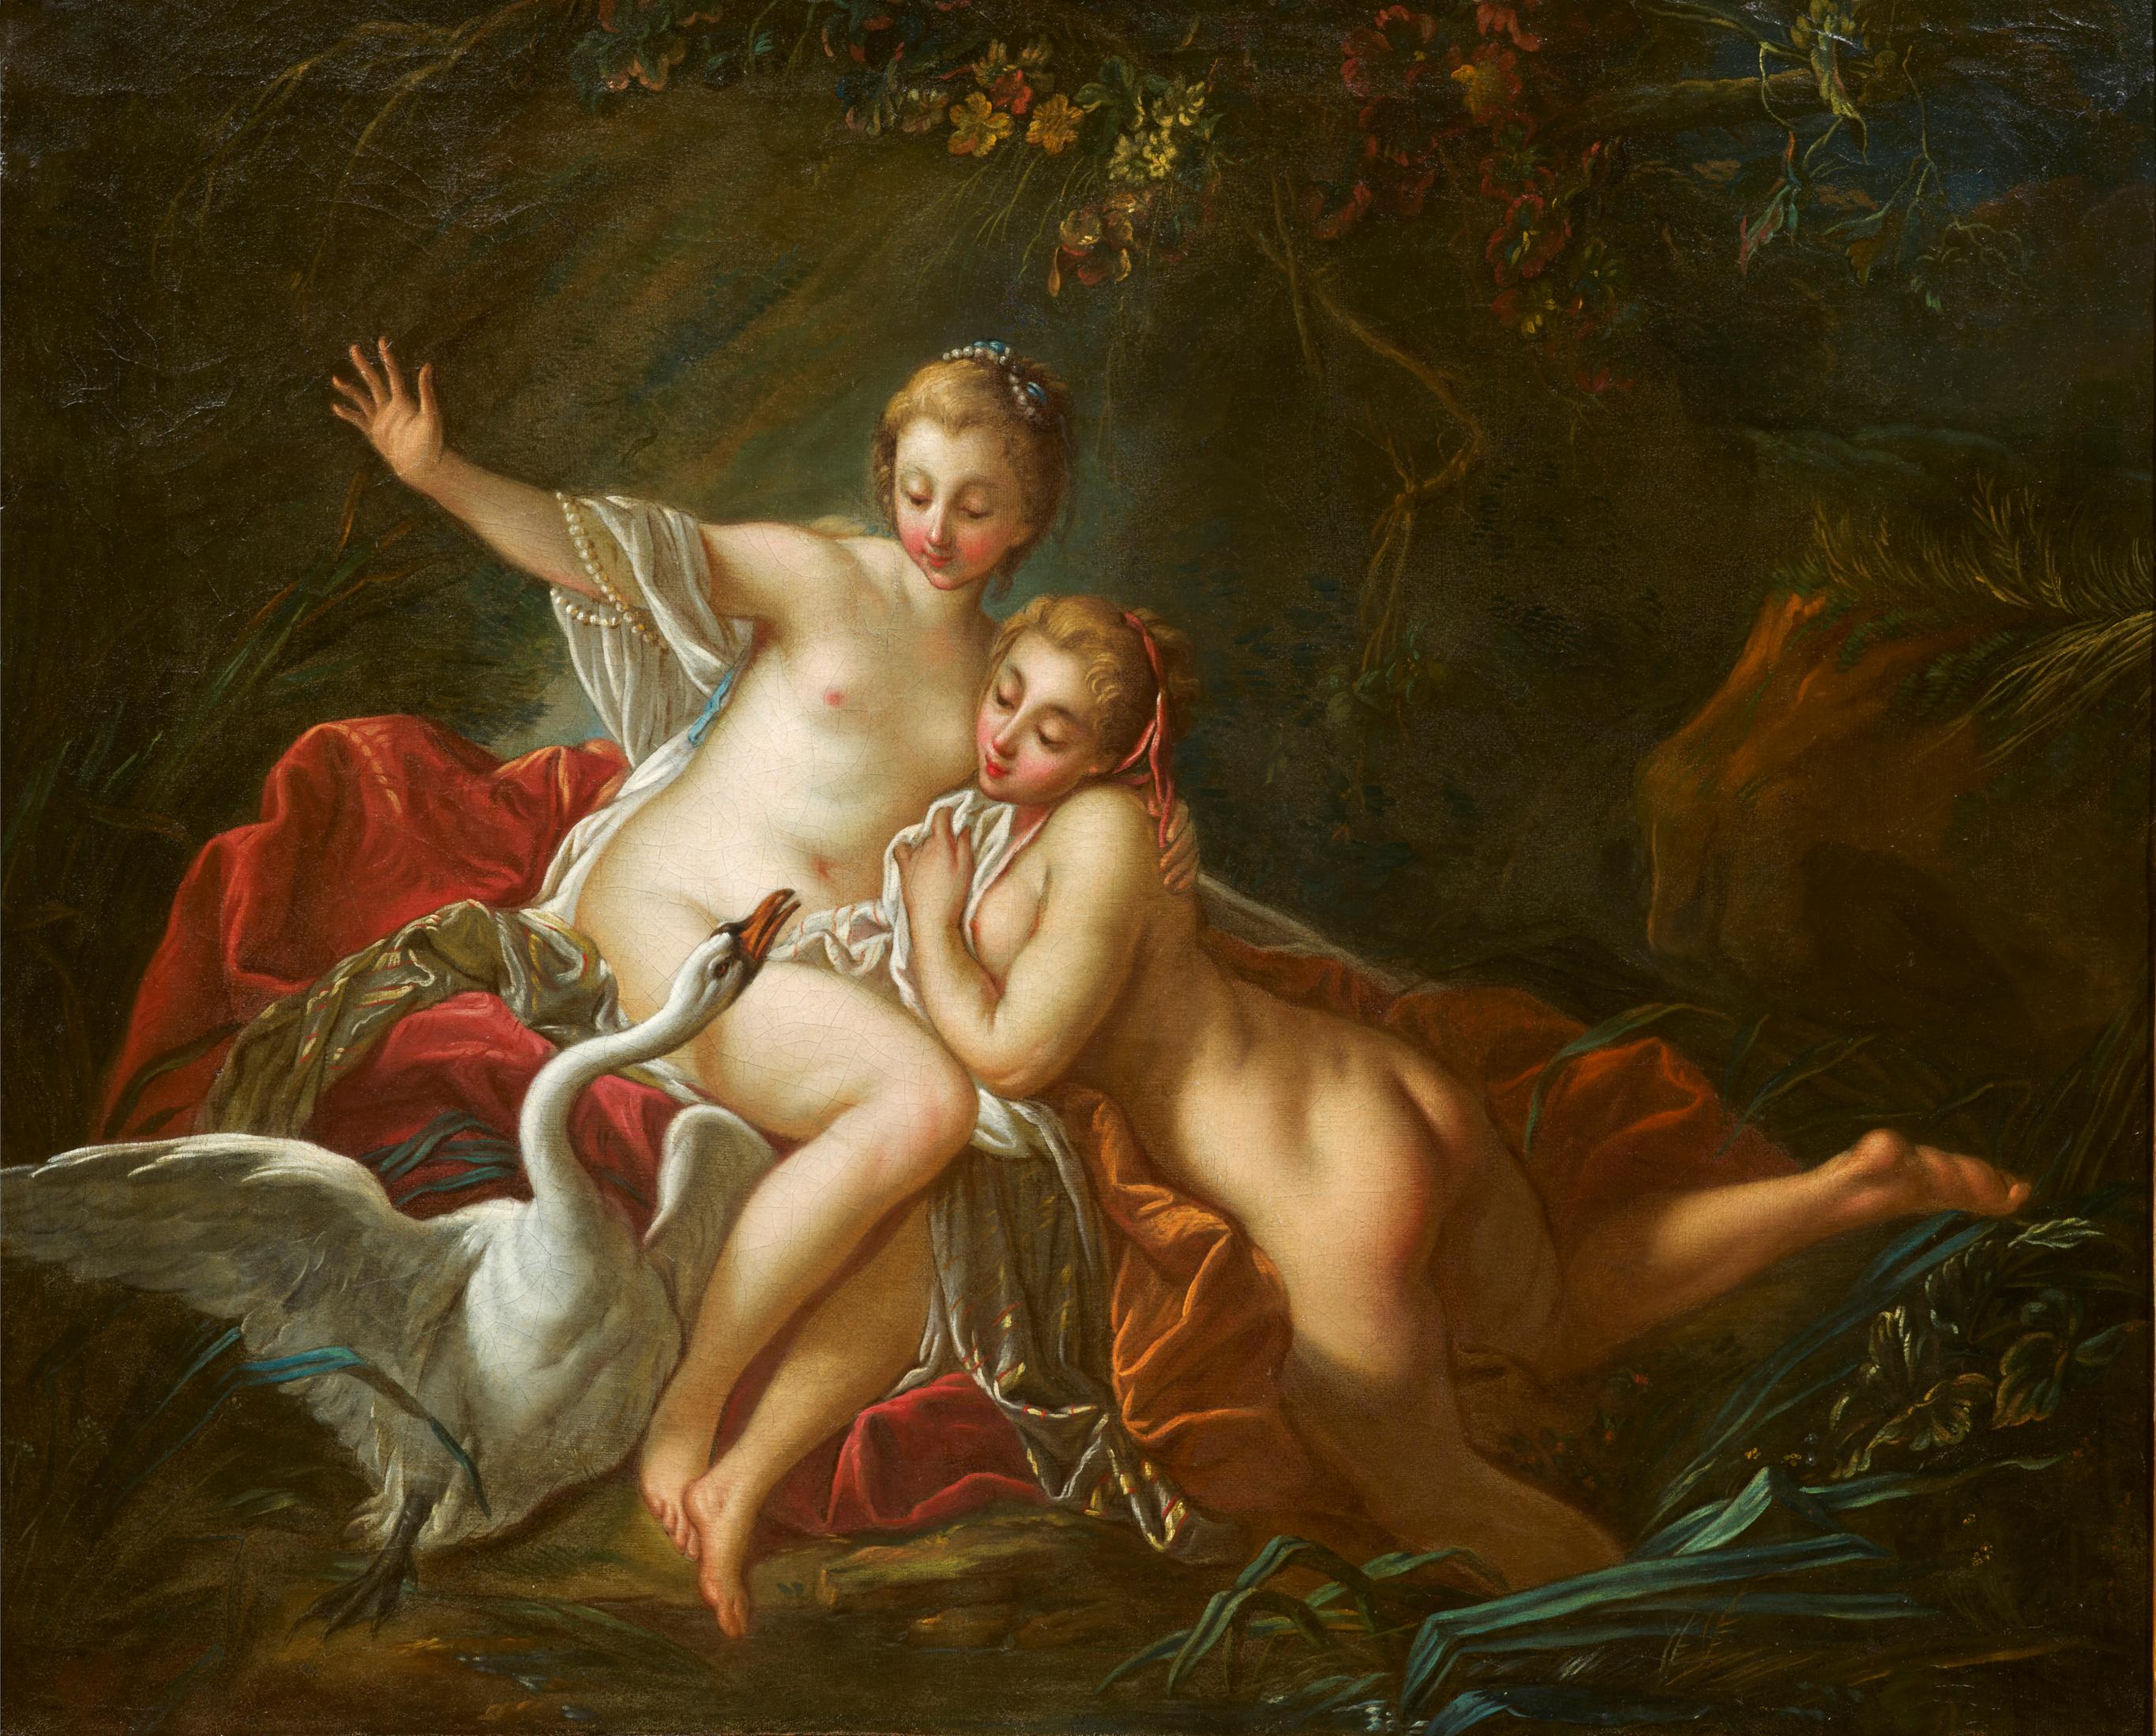 François Boucher Nude Painting - Leda and the Swan by the workshop of Francois Boucher (Paris 1703 - 1770) 